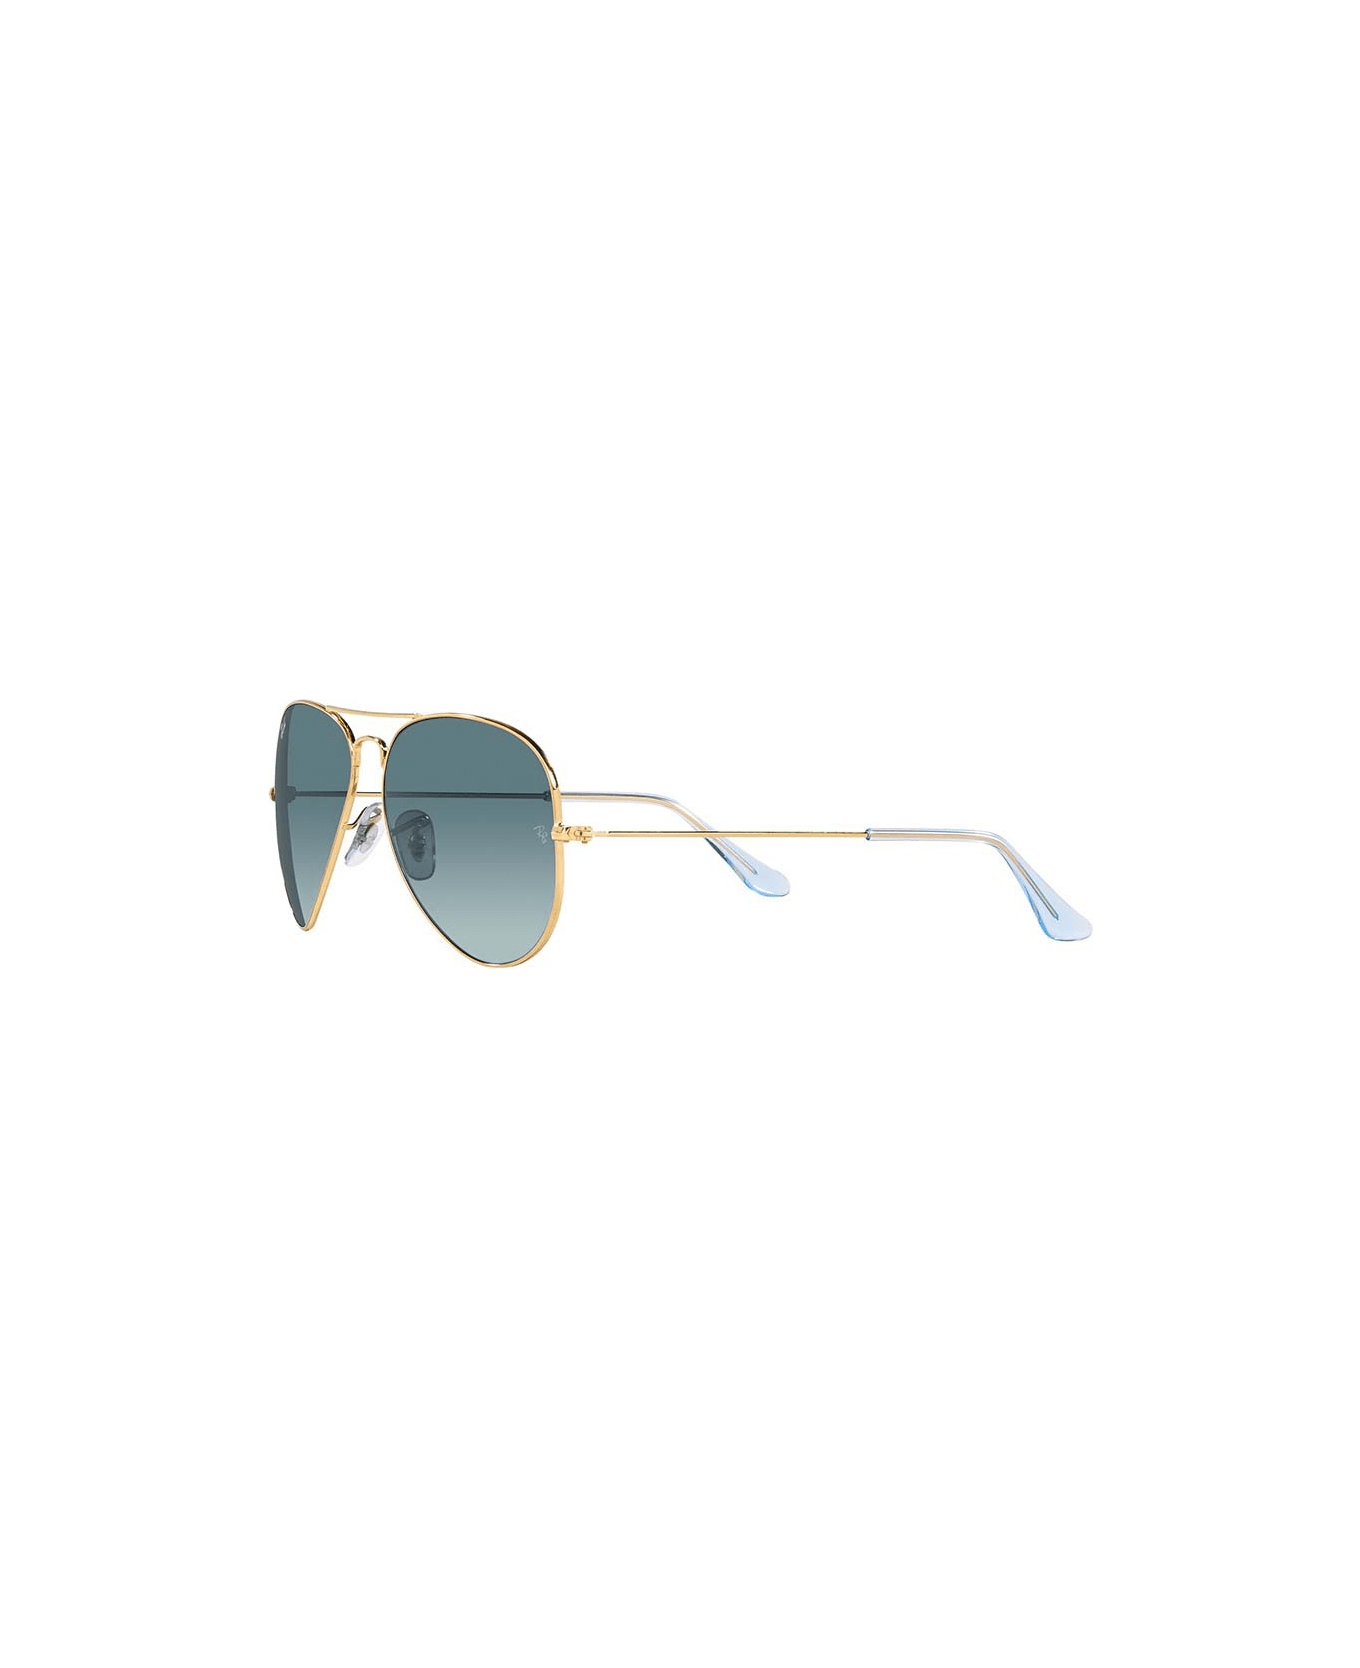 Ray-Ban Sunglasses - Oro/Blu sfumato